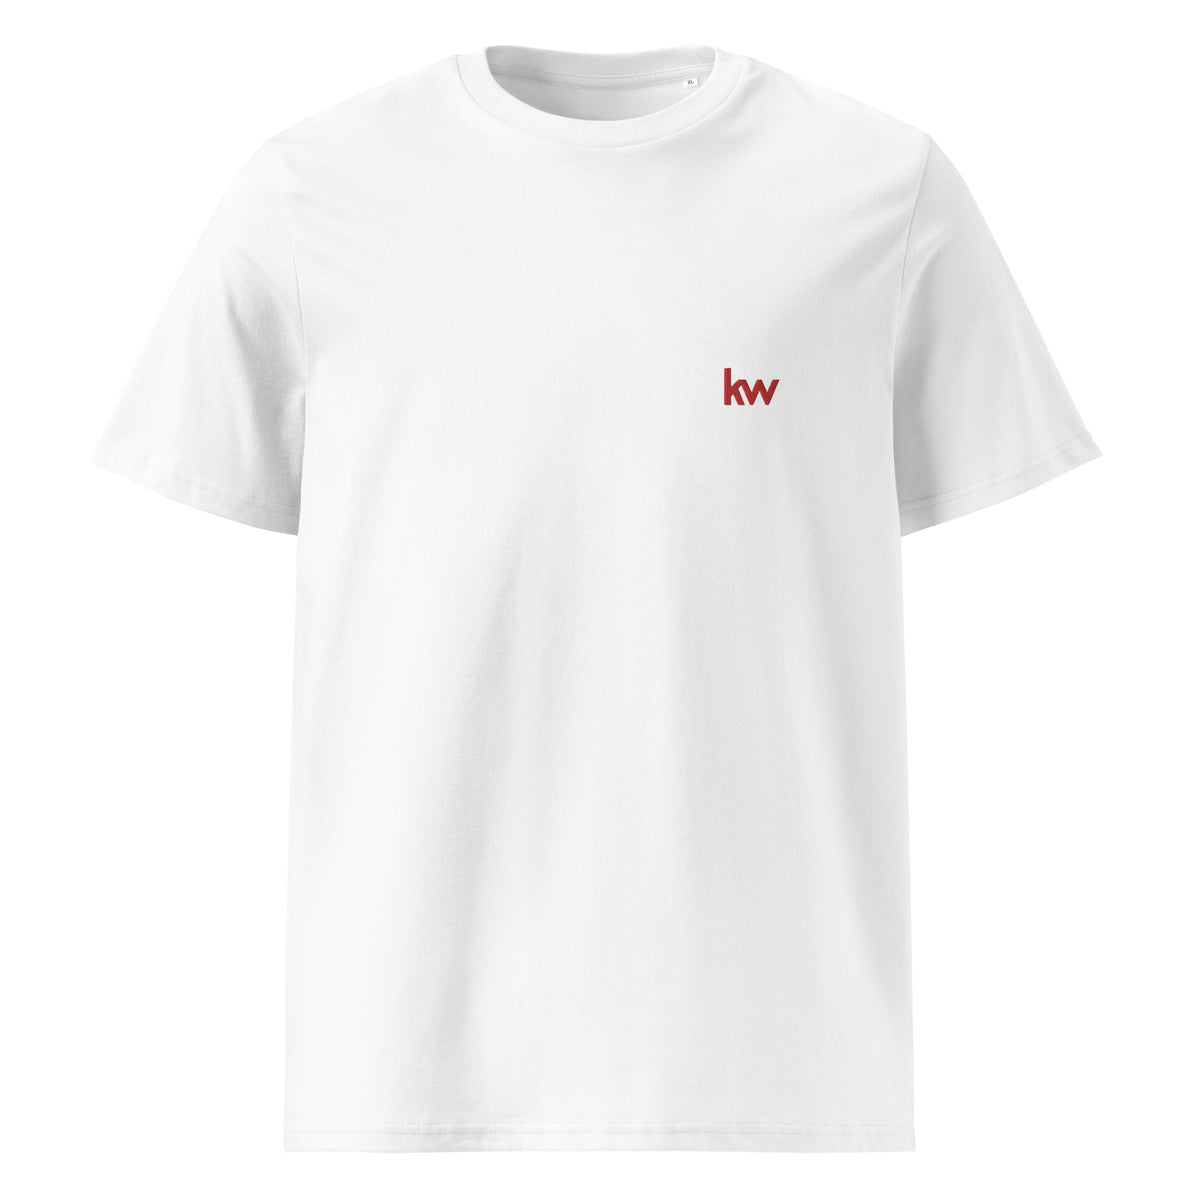 T-Shirt Premium Unisexe Brodé - KW